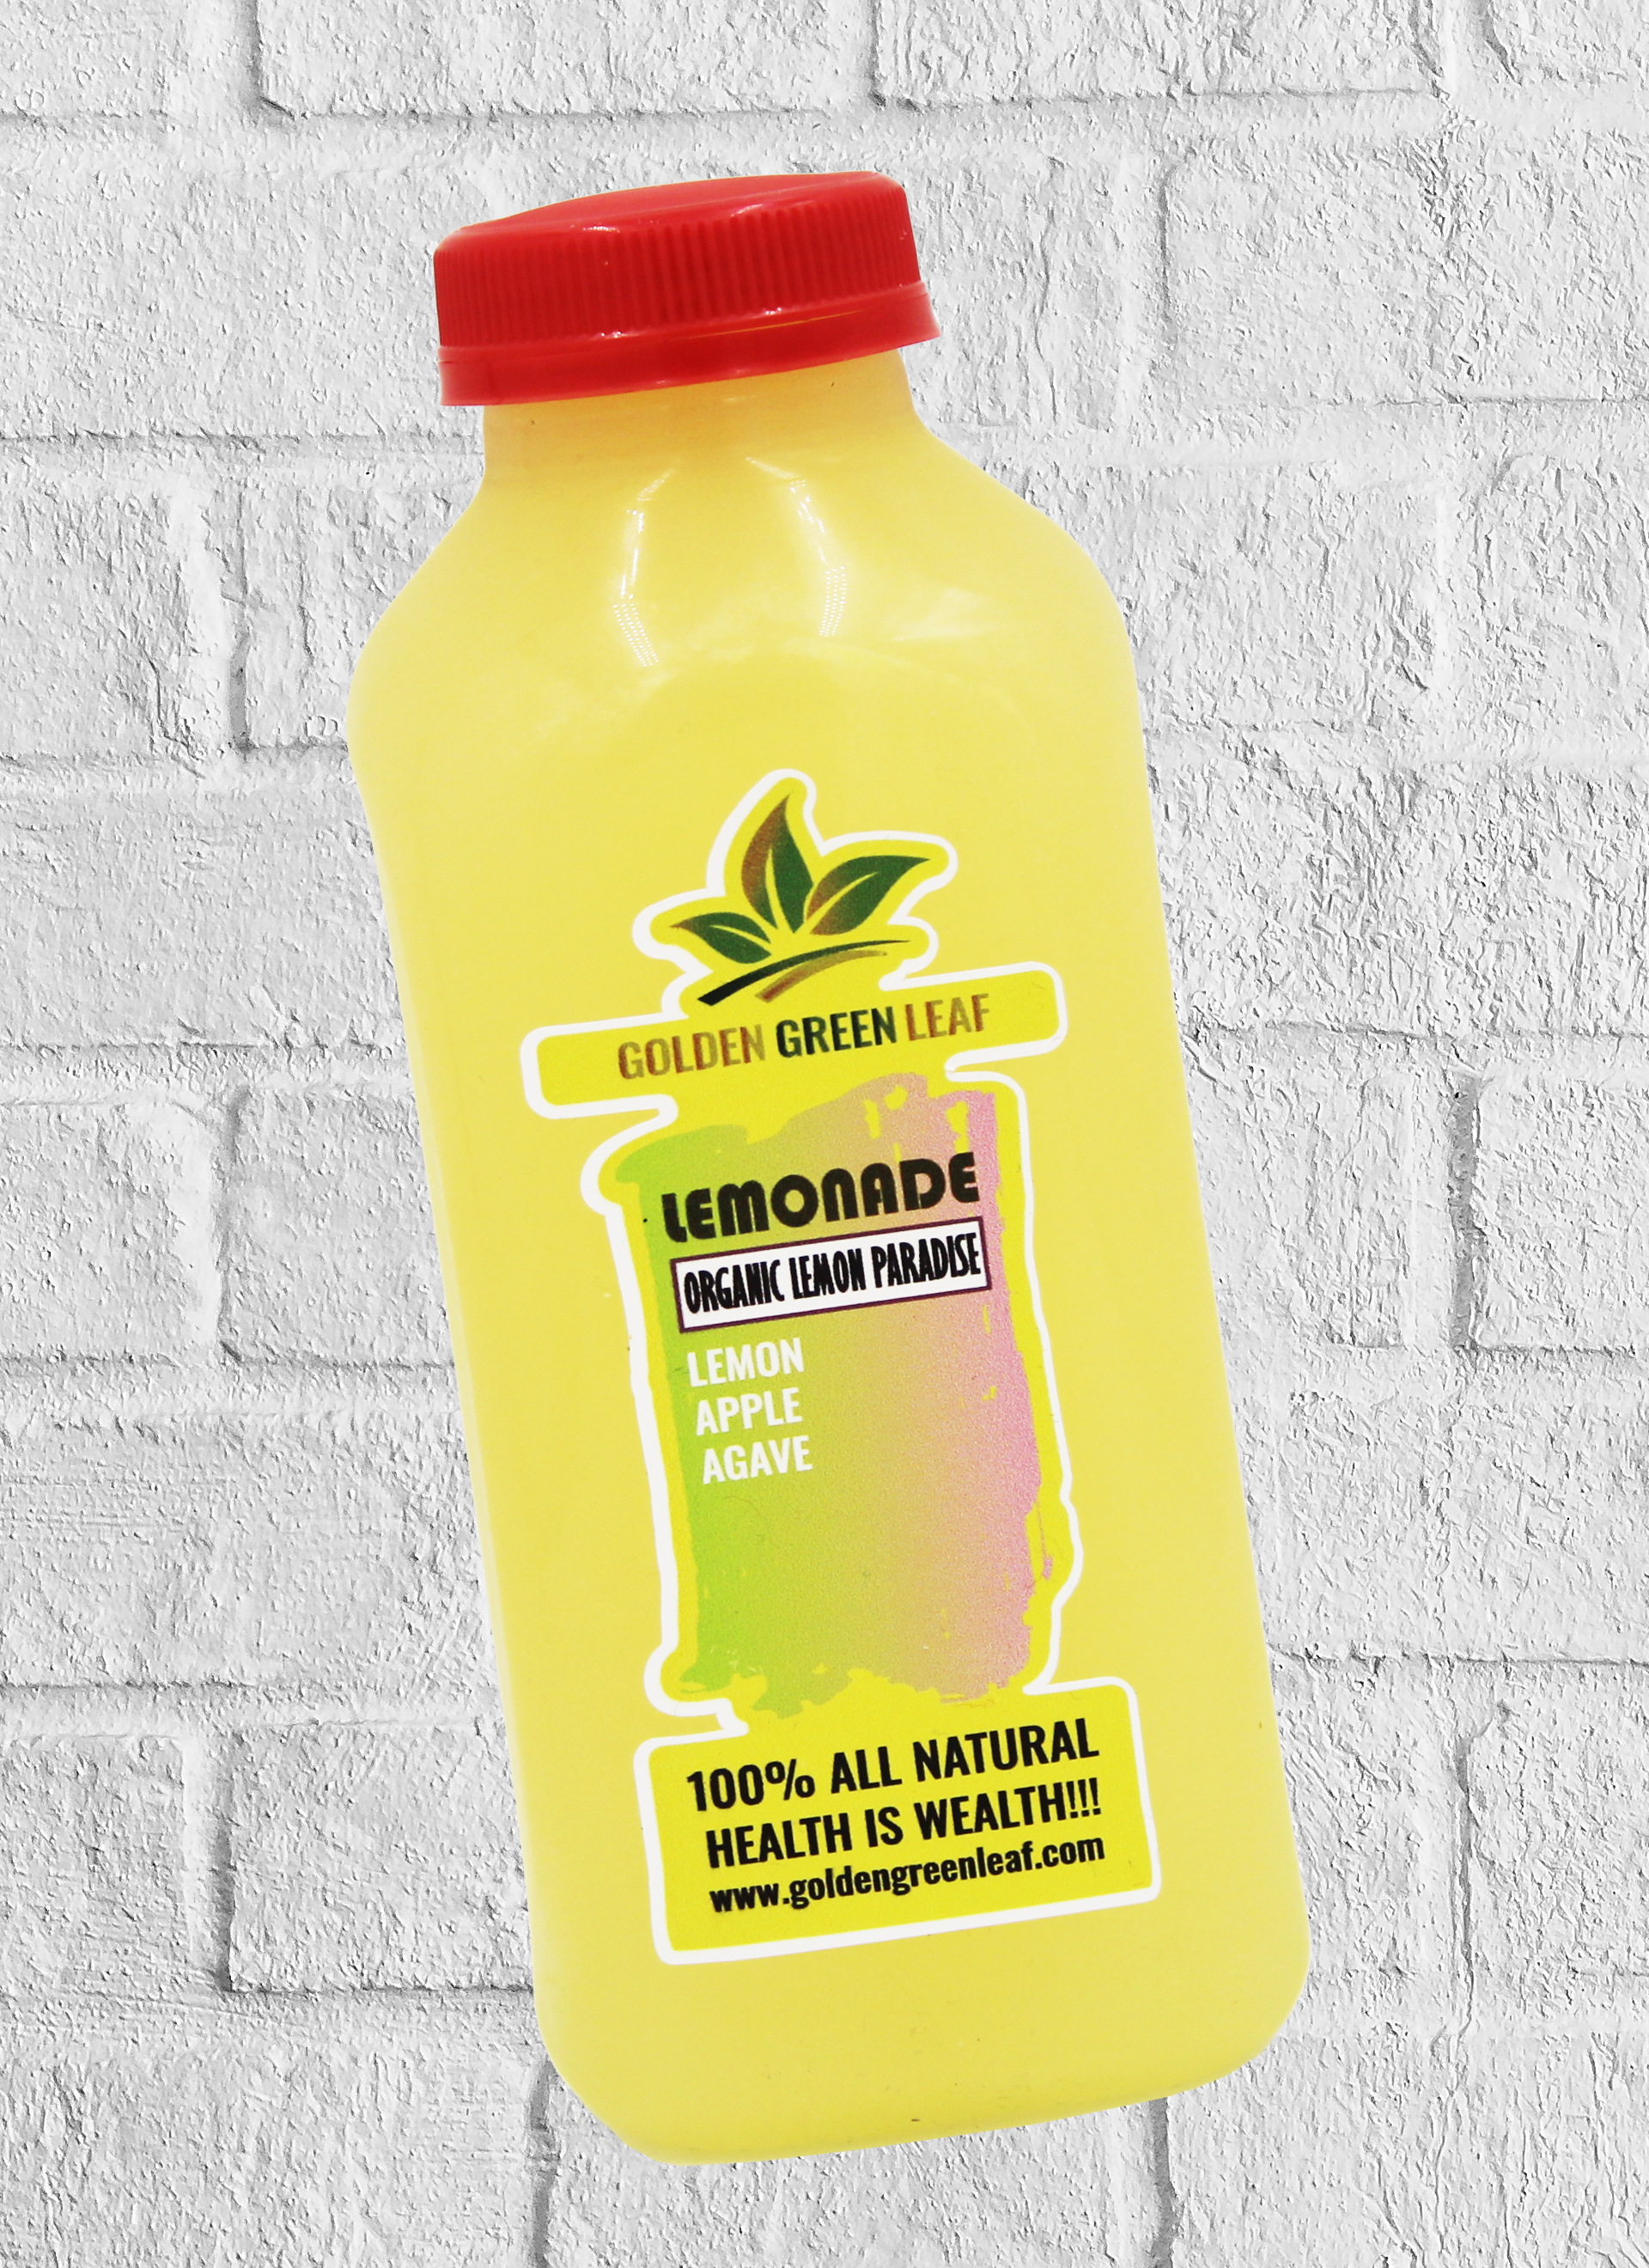 Organic Lemon Paradise